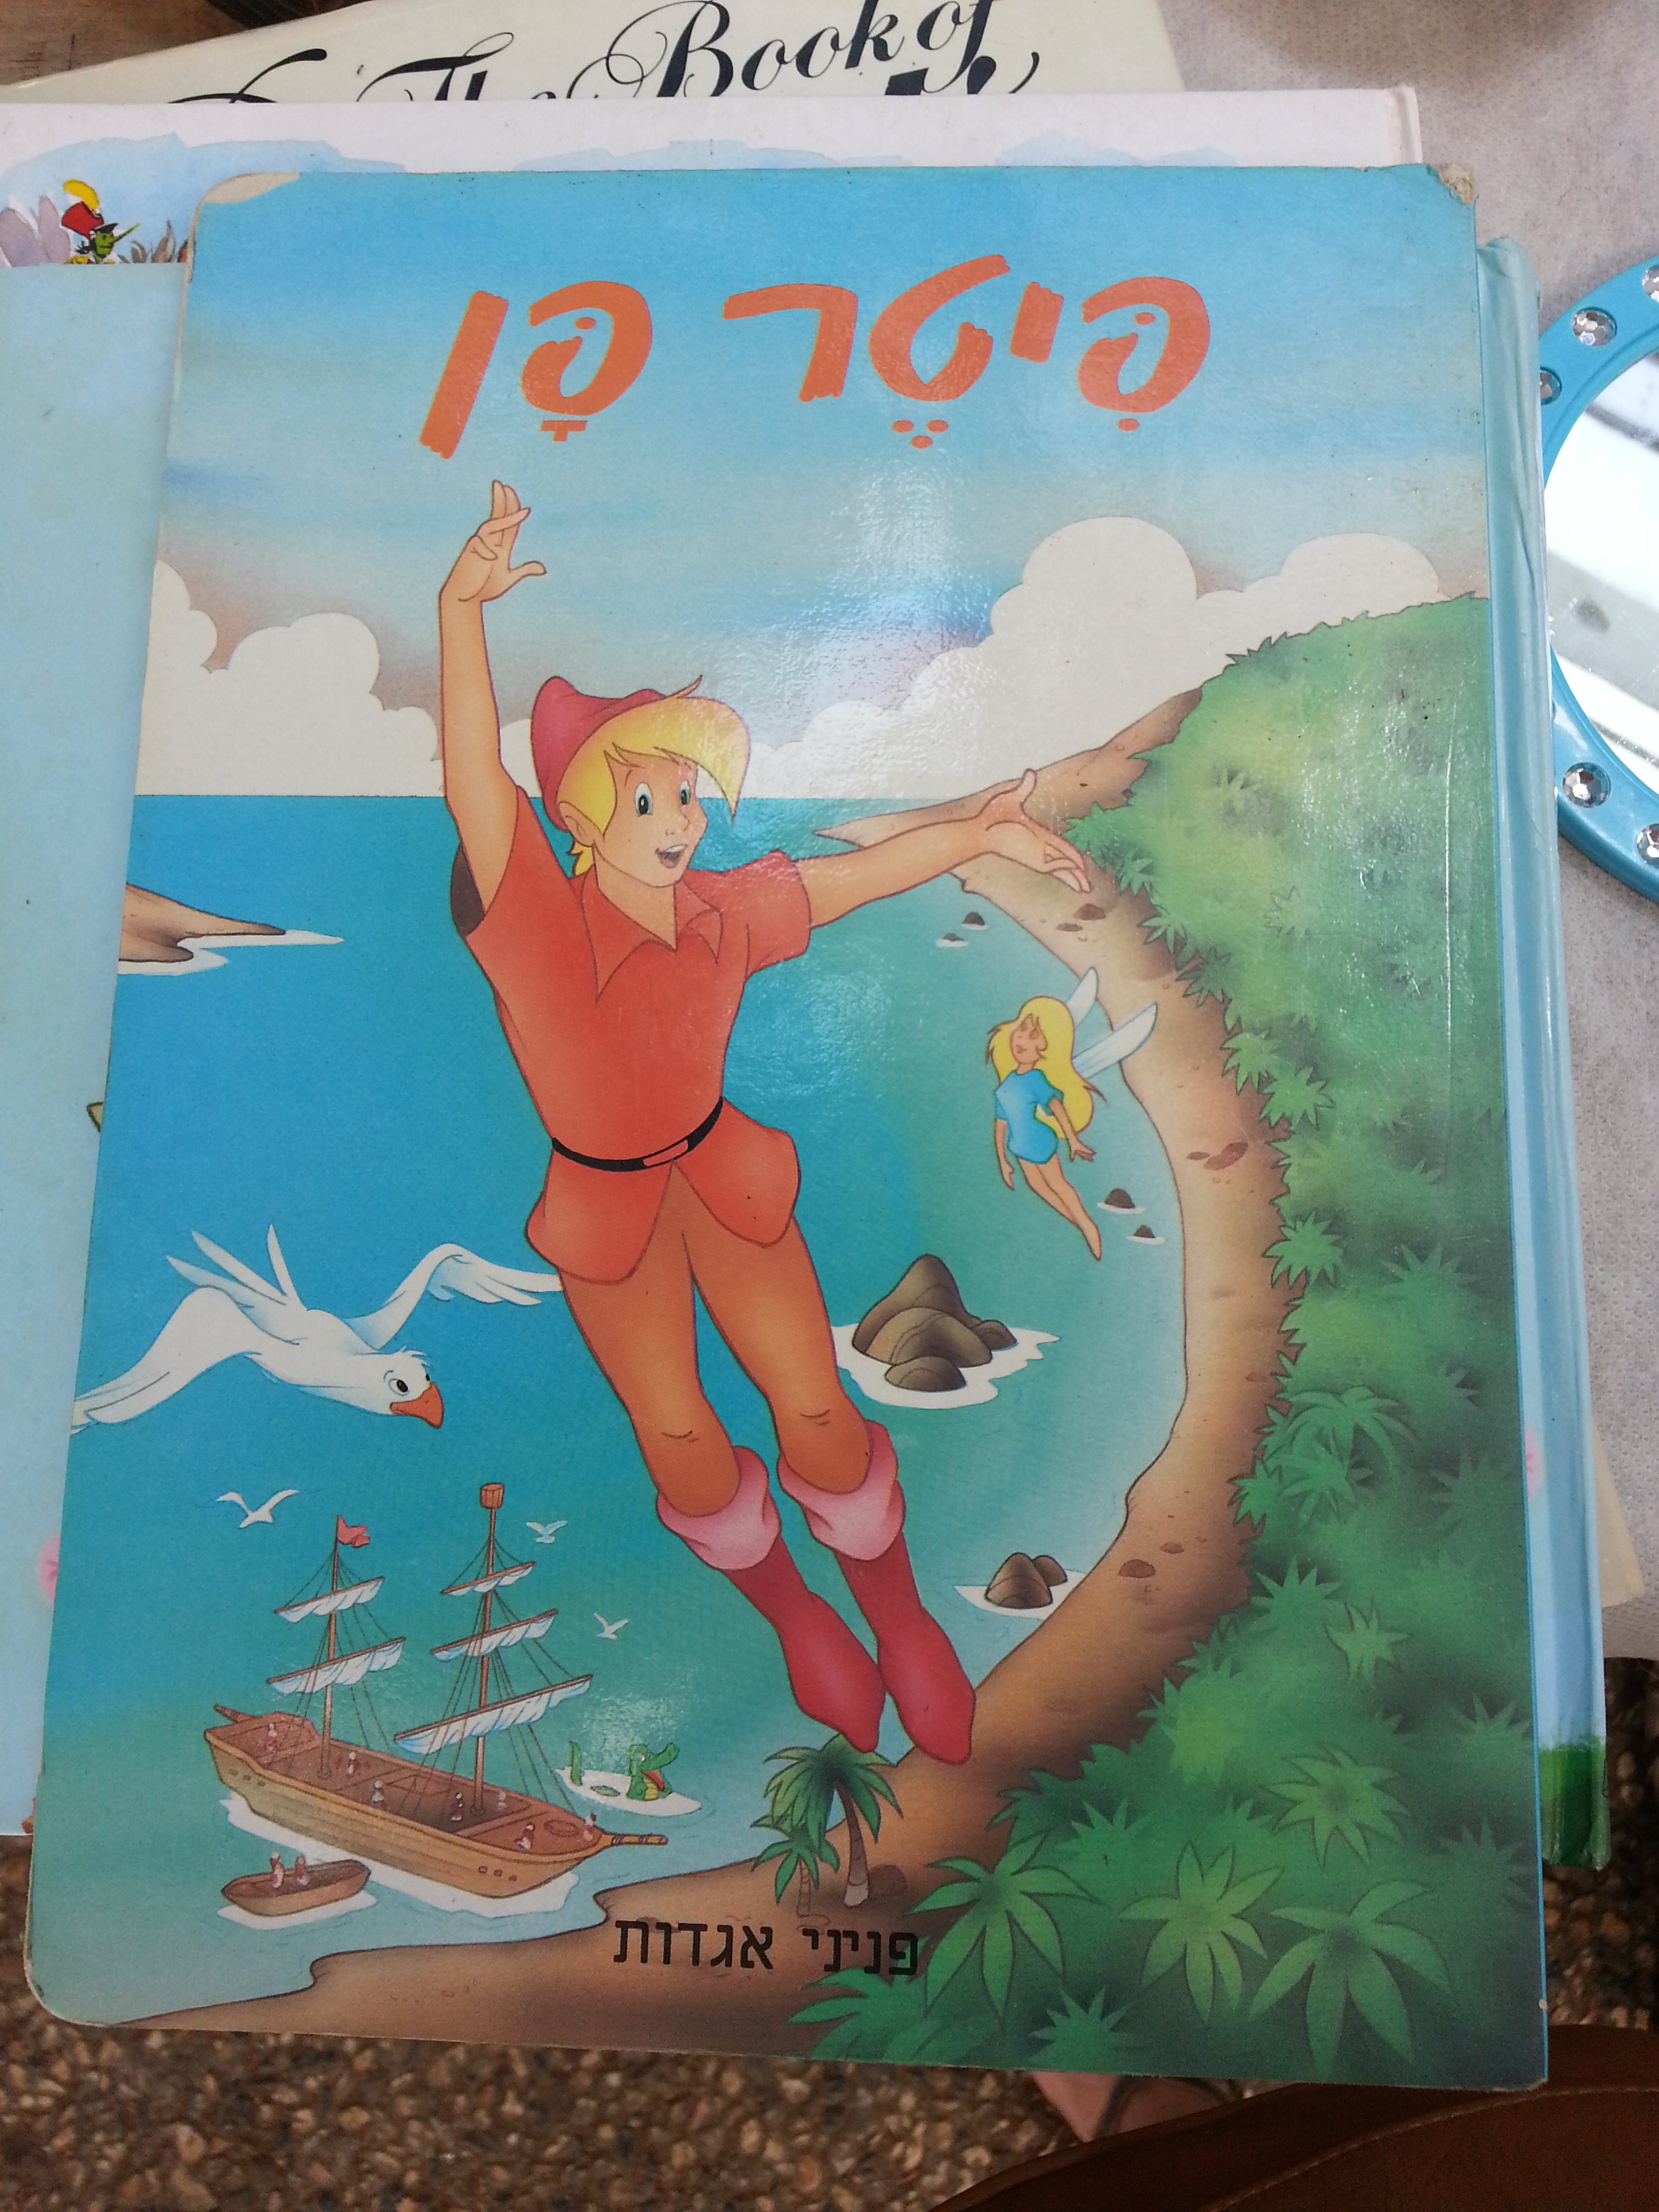 Hebrew version of Peter Pan